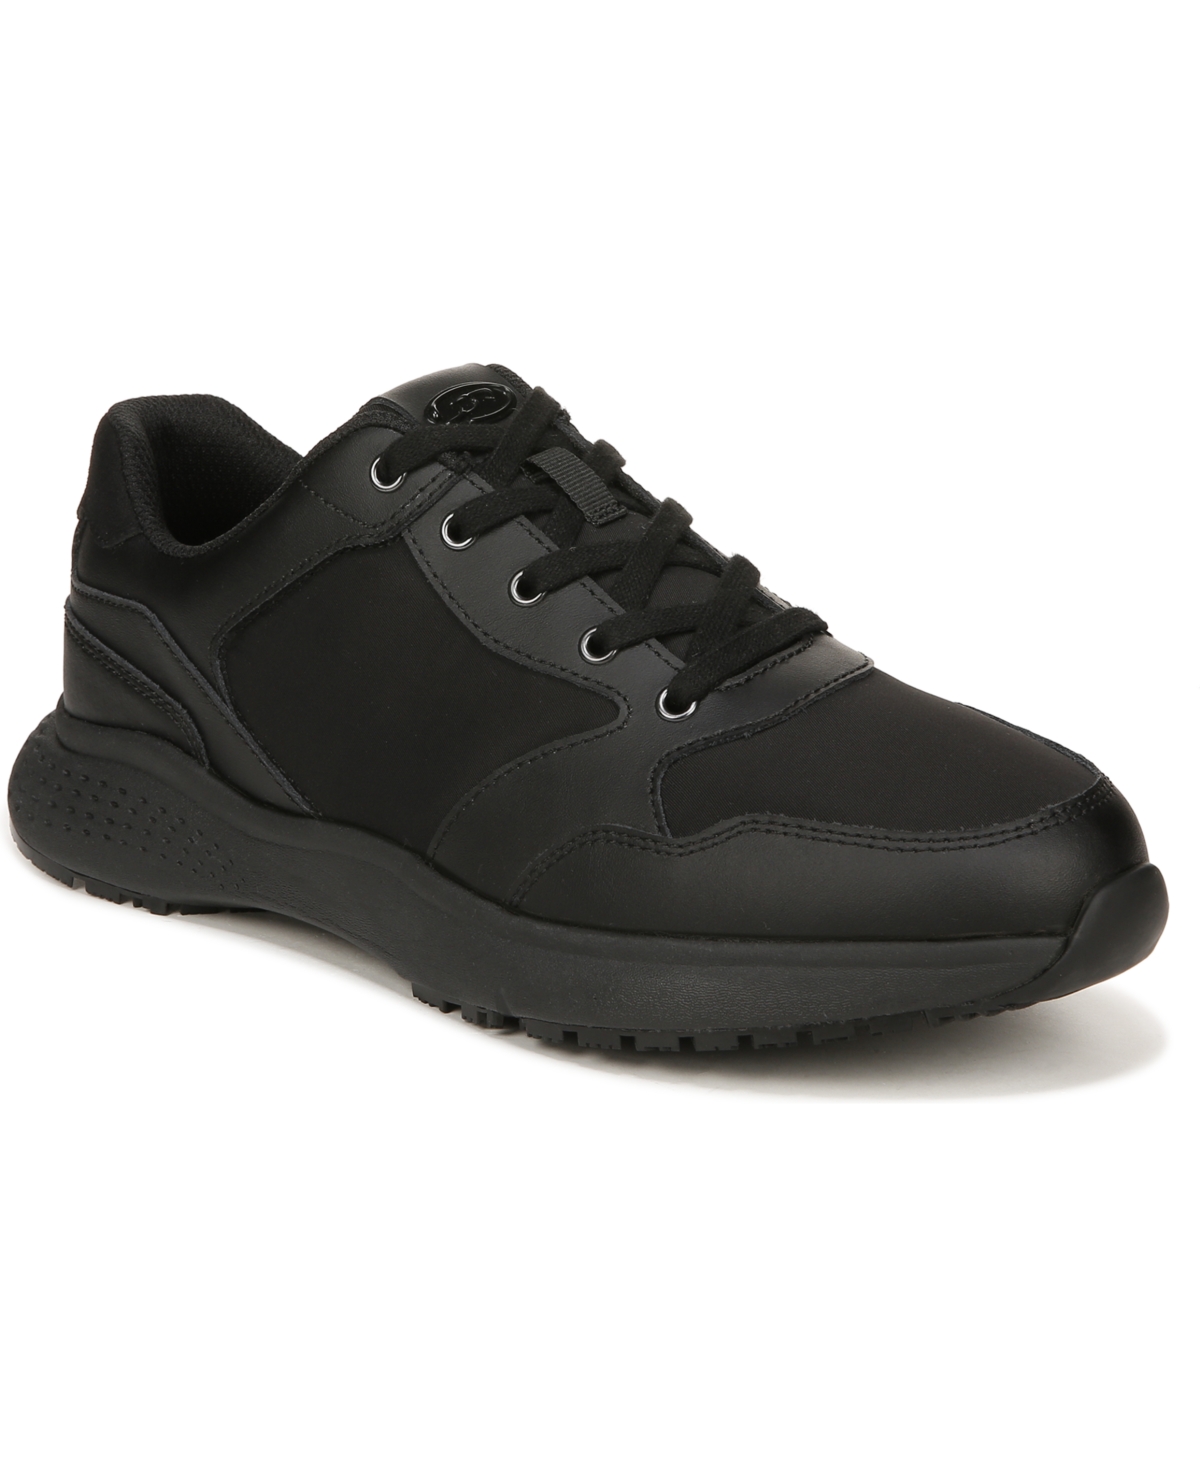 Men's Nolan Slip Resistant Work Shoes - Black Leather